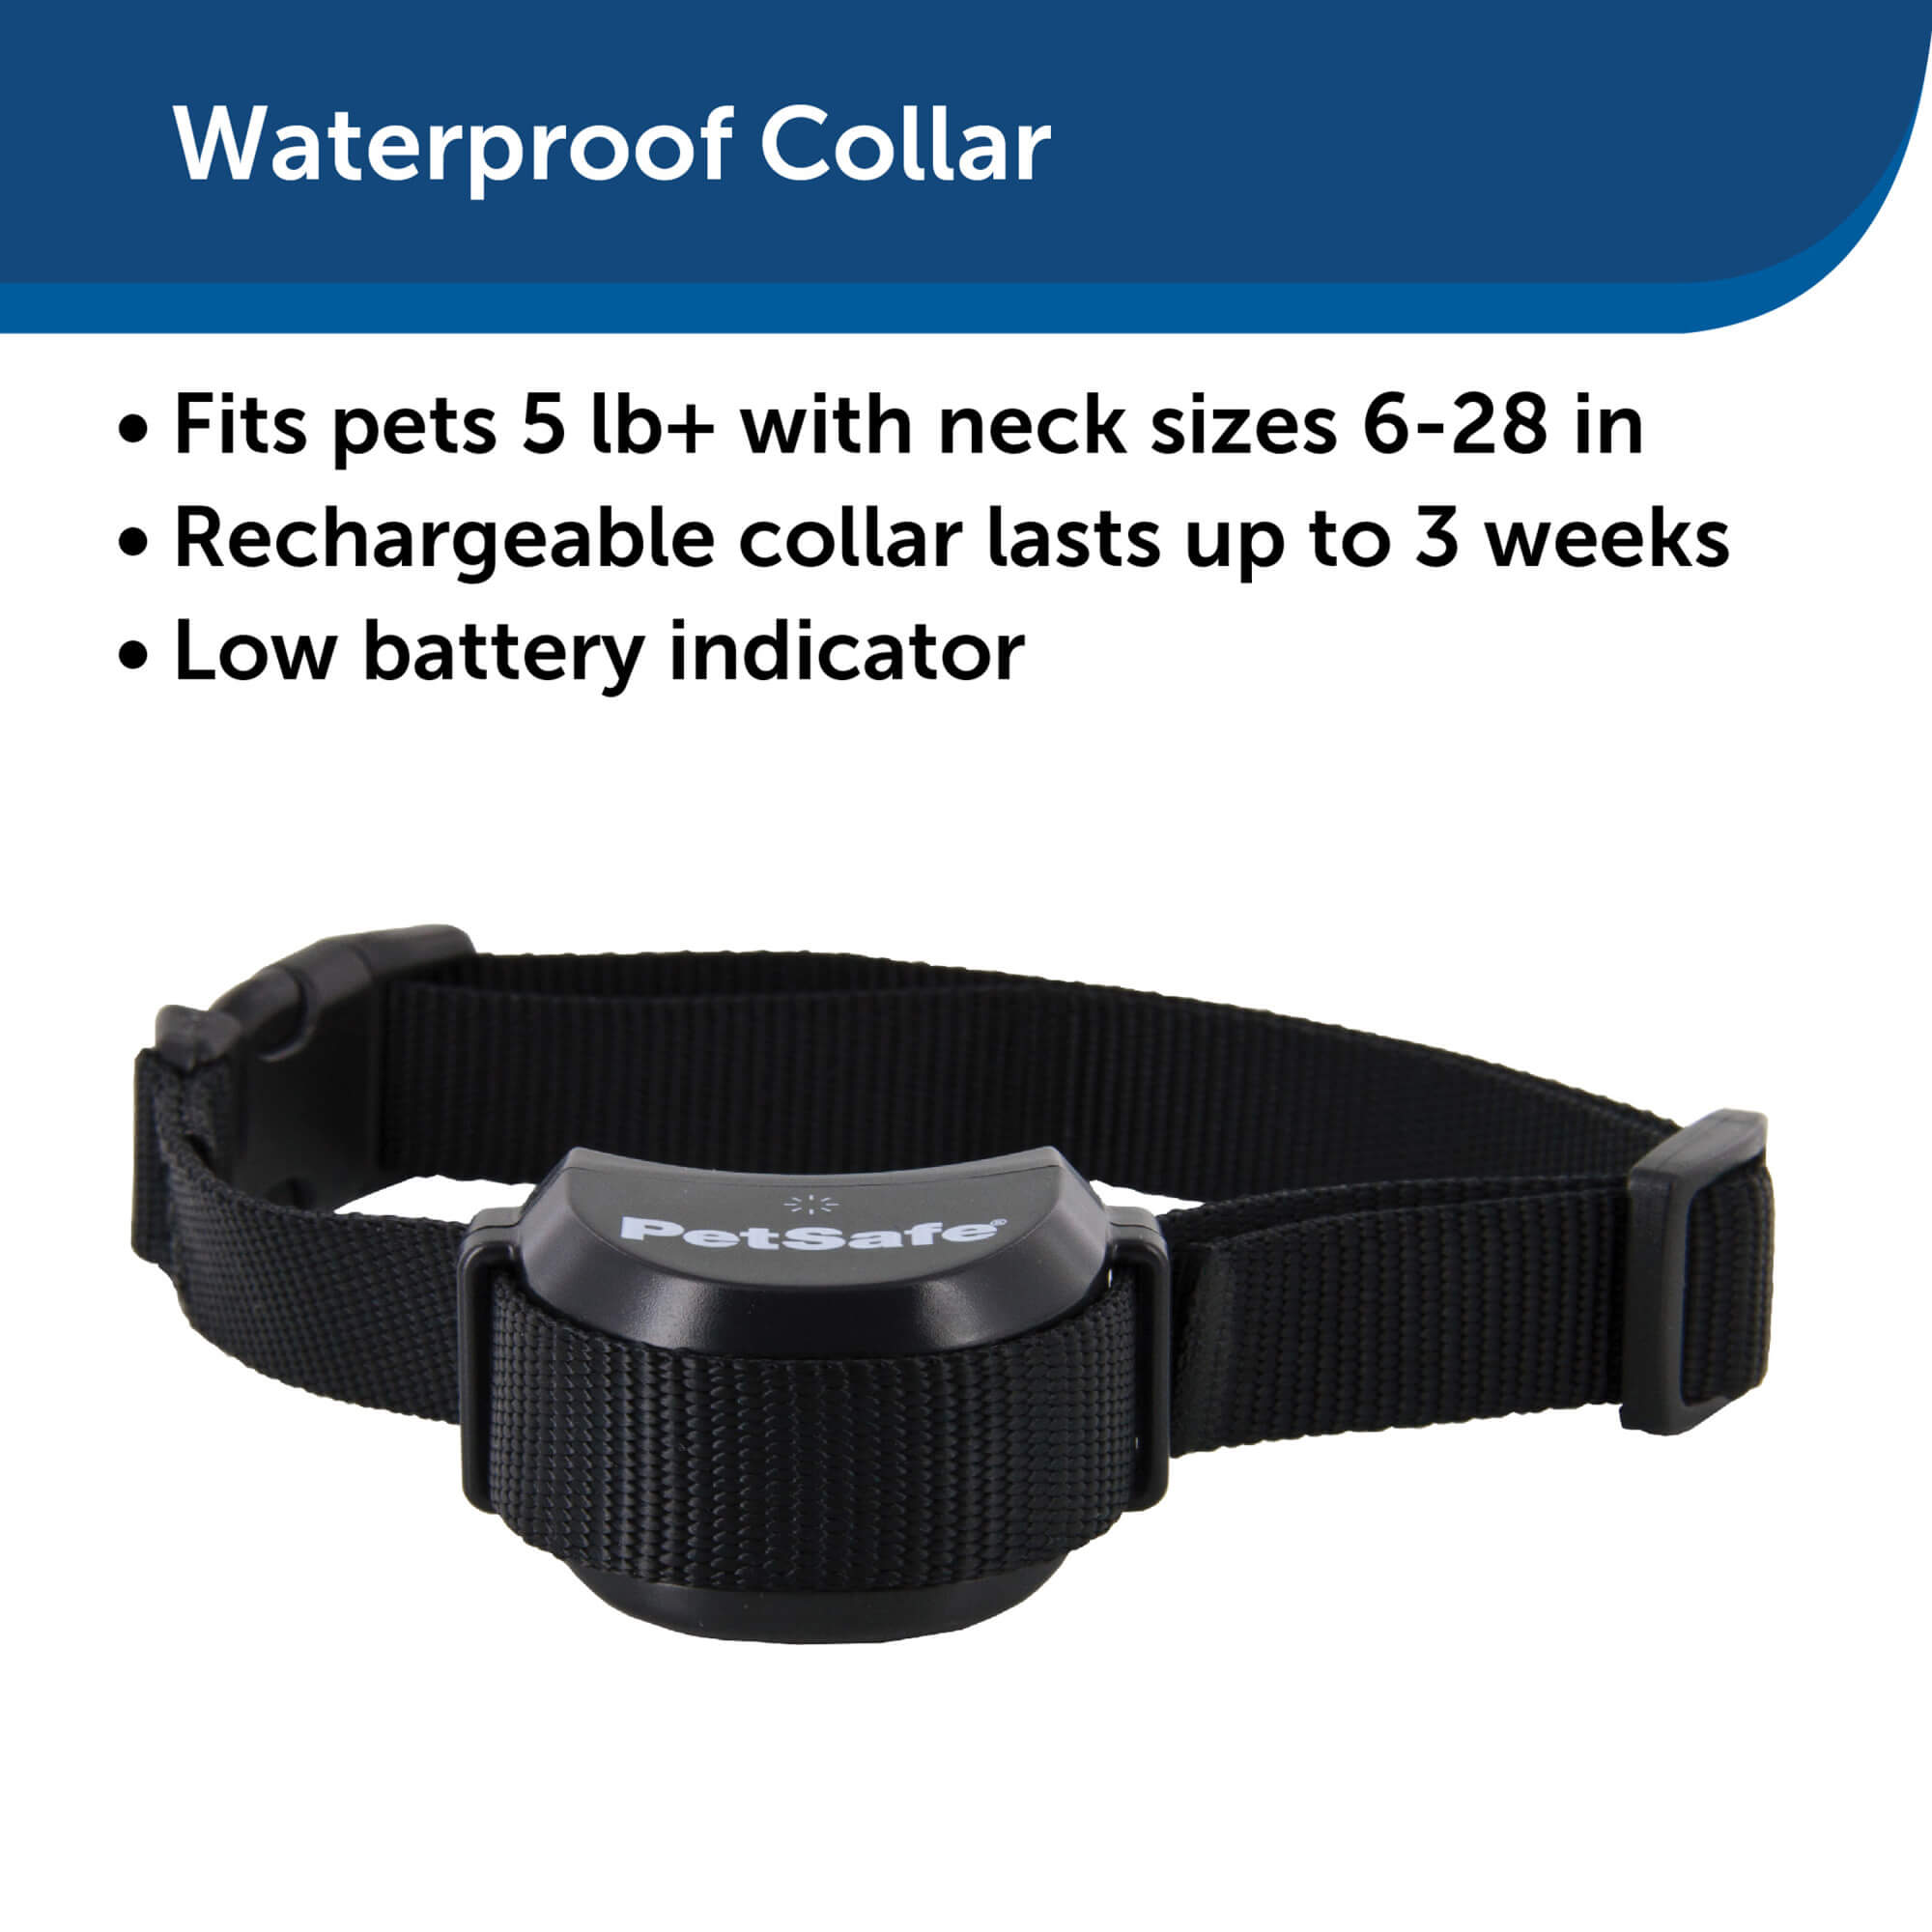 Waterproof PetSafe collar